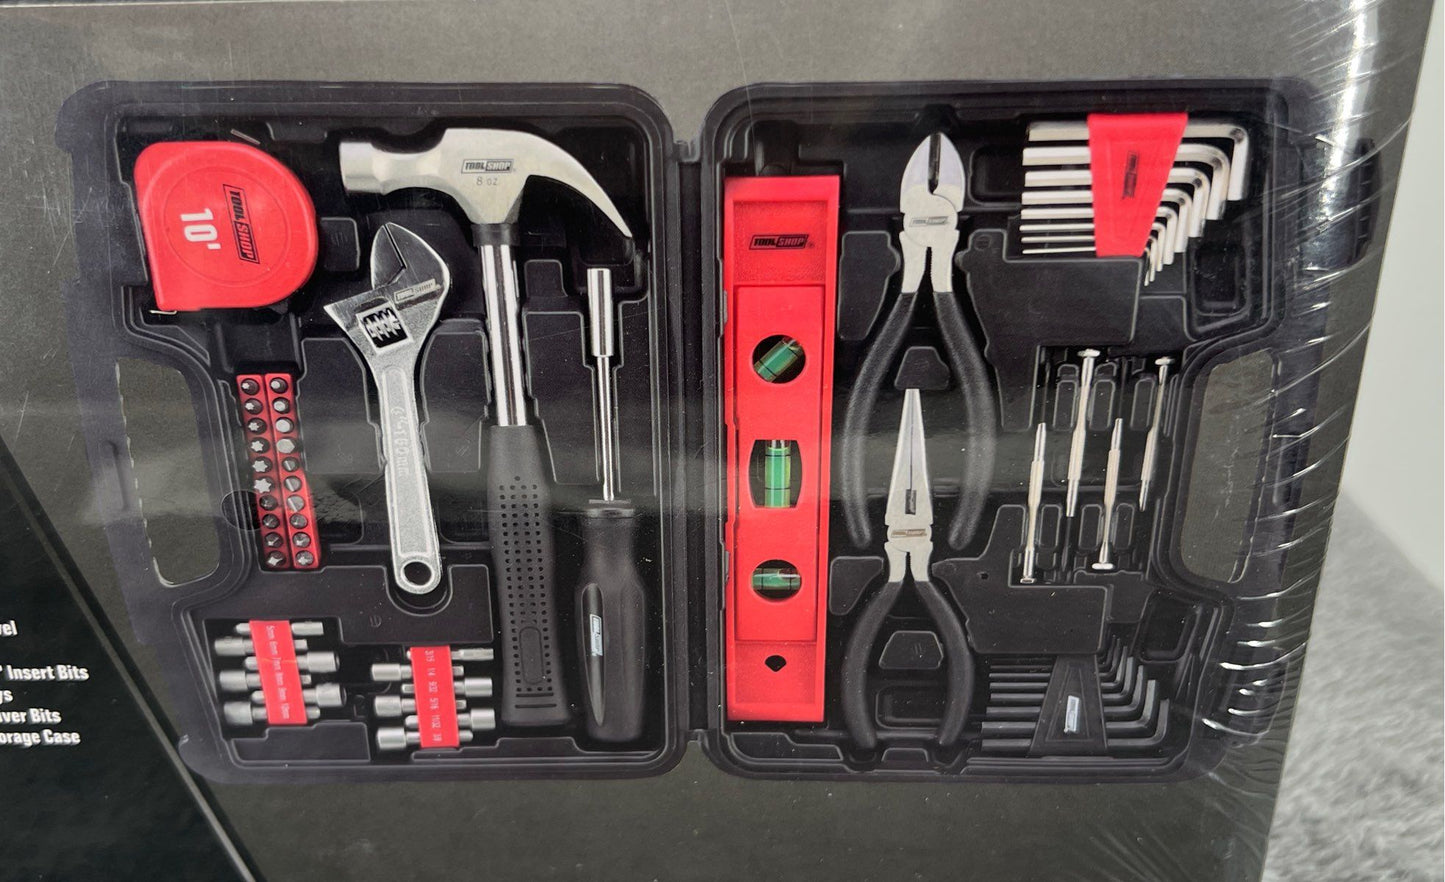 New Tool Shop 60 Piece Homeowner Tool Box Set #244-1001-Guaranteed Forever